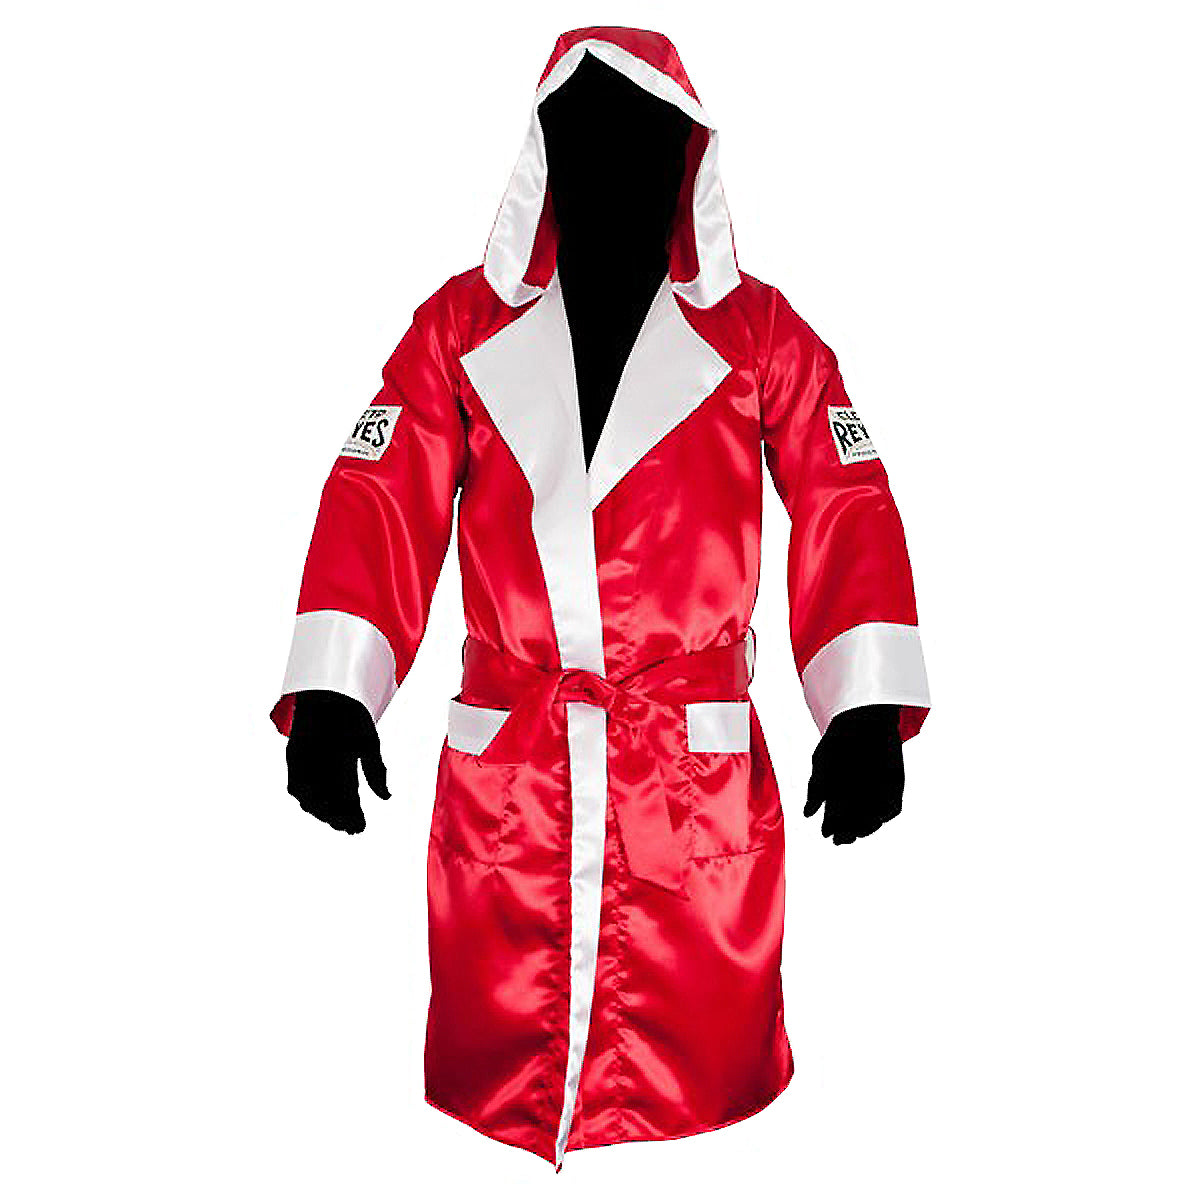 Cleto Reyes Satin Boxing Robe with Hood - Red/White Cleto Reyes